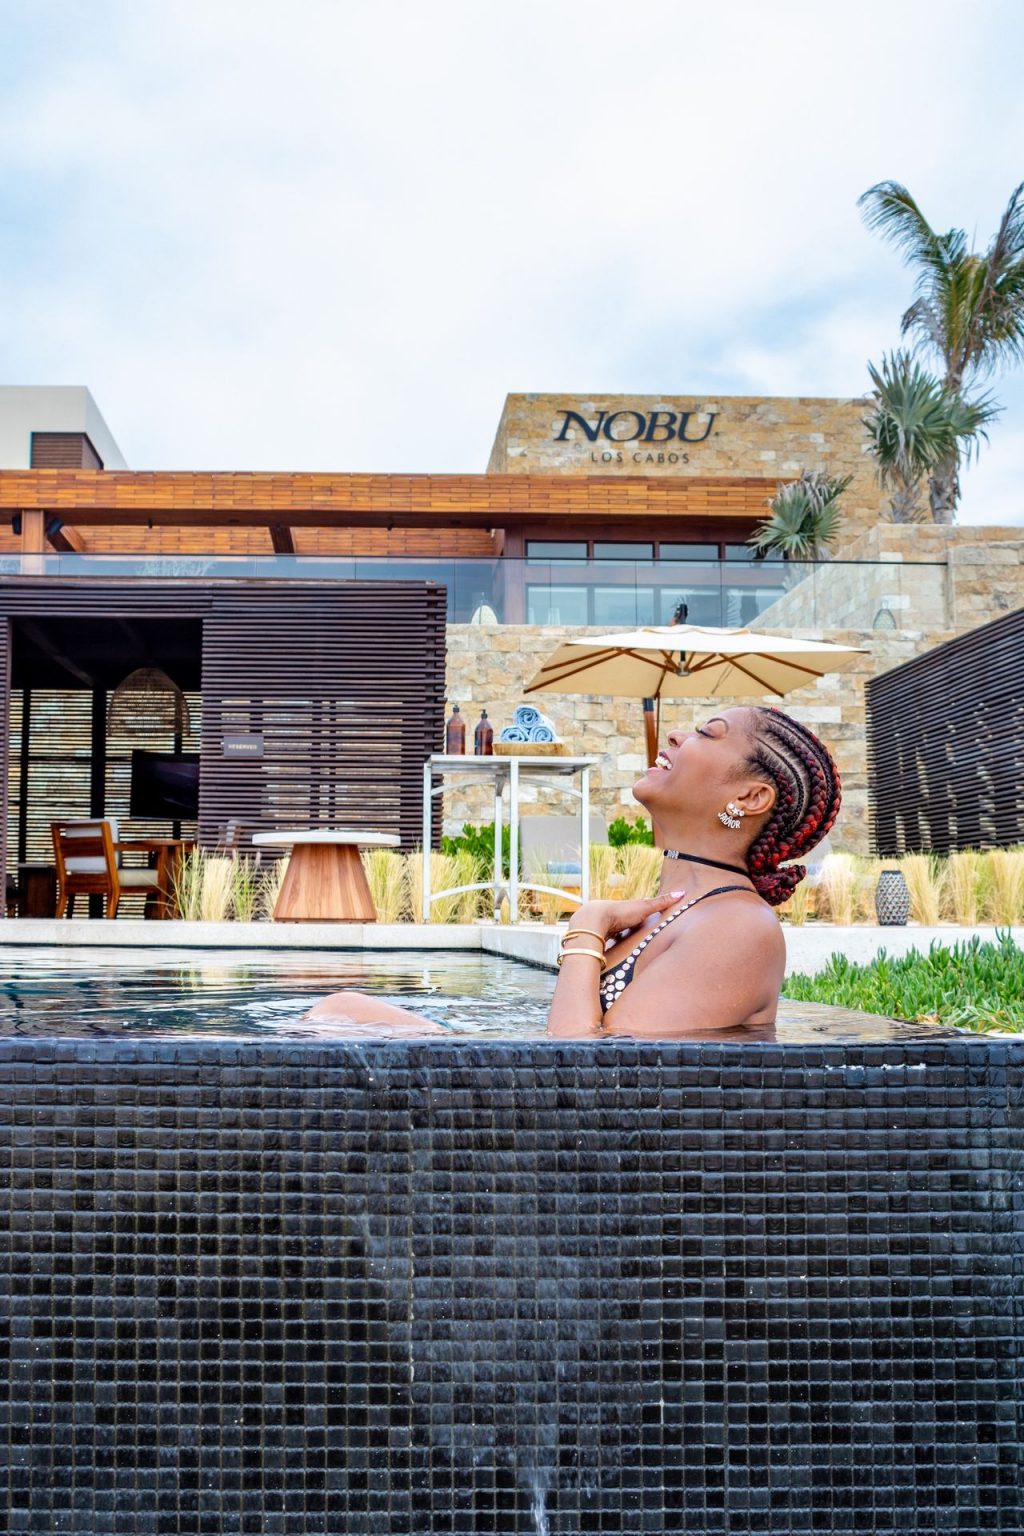 Taraji P. Henson Shows Off Her Stunning Figure at Nobu Hotel (21 Photos)